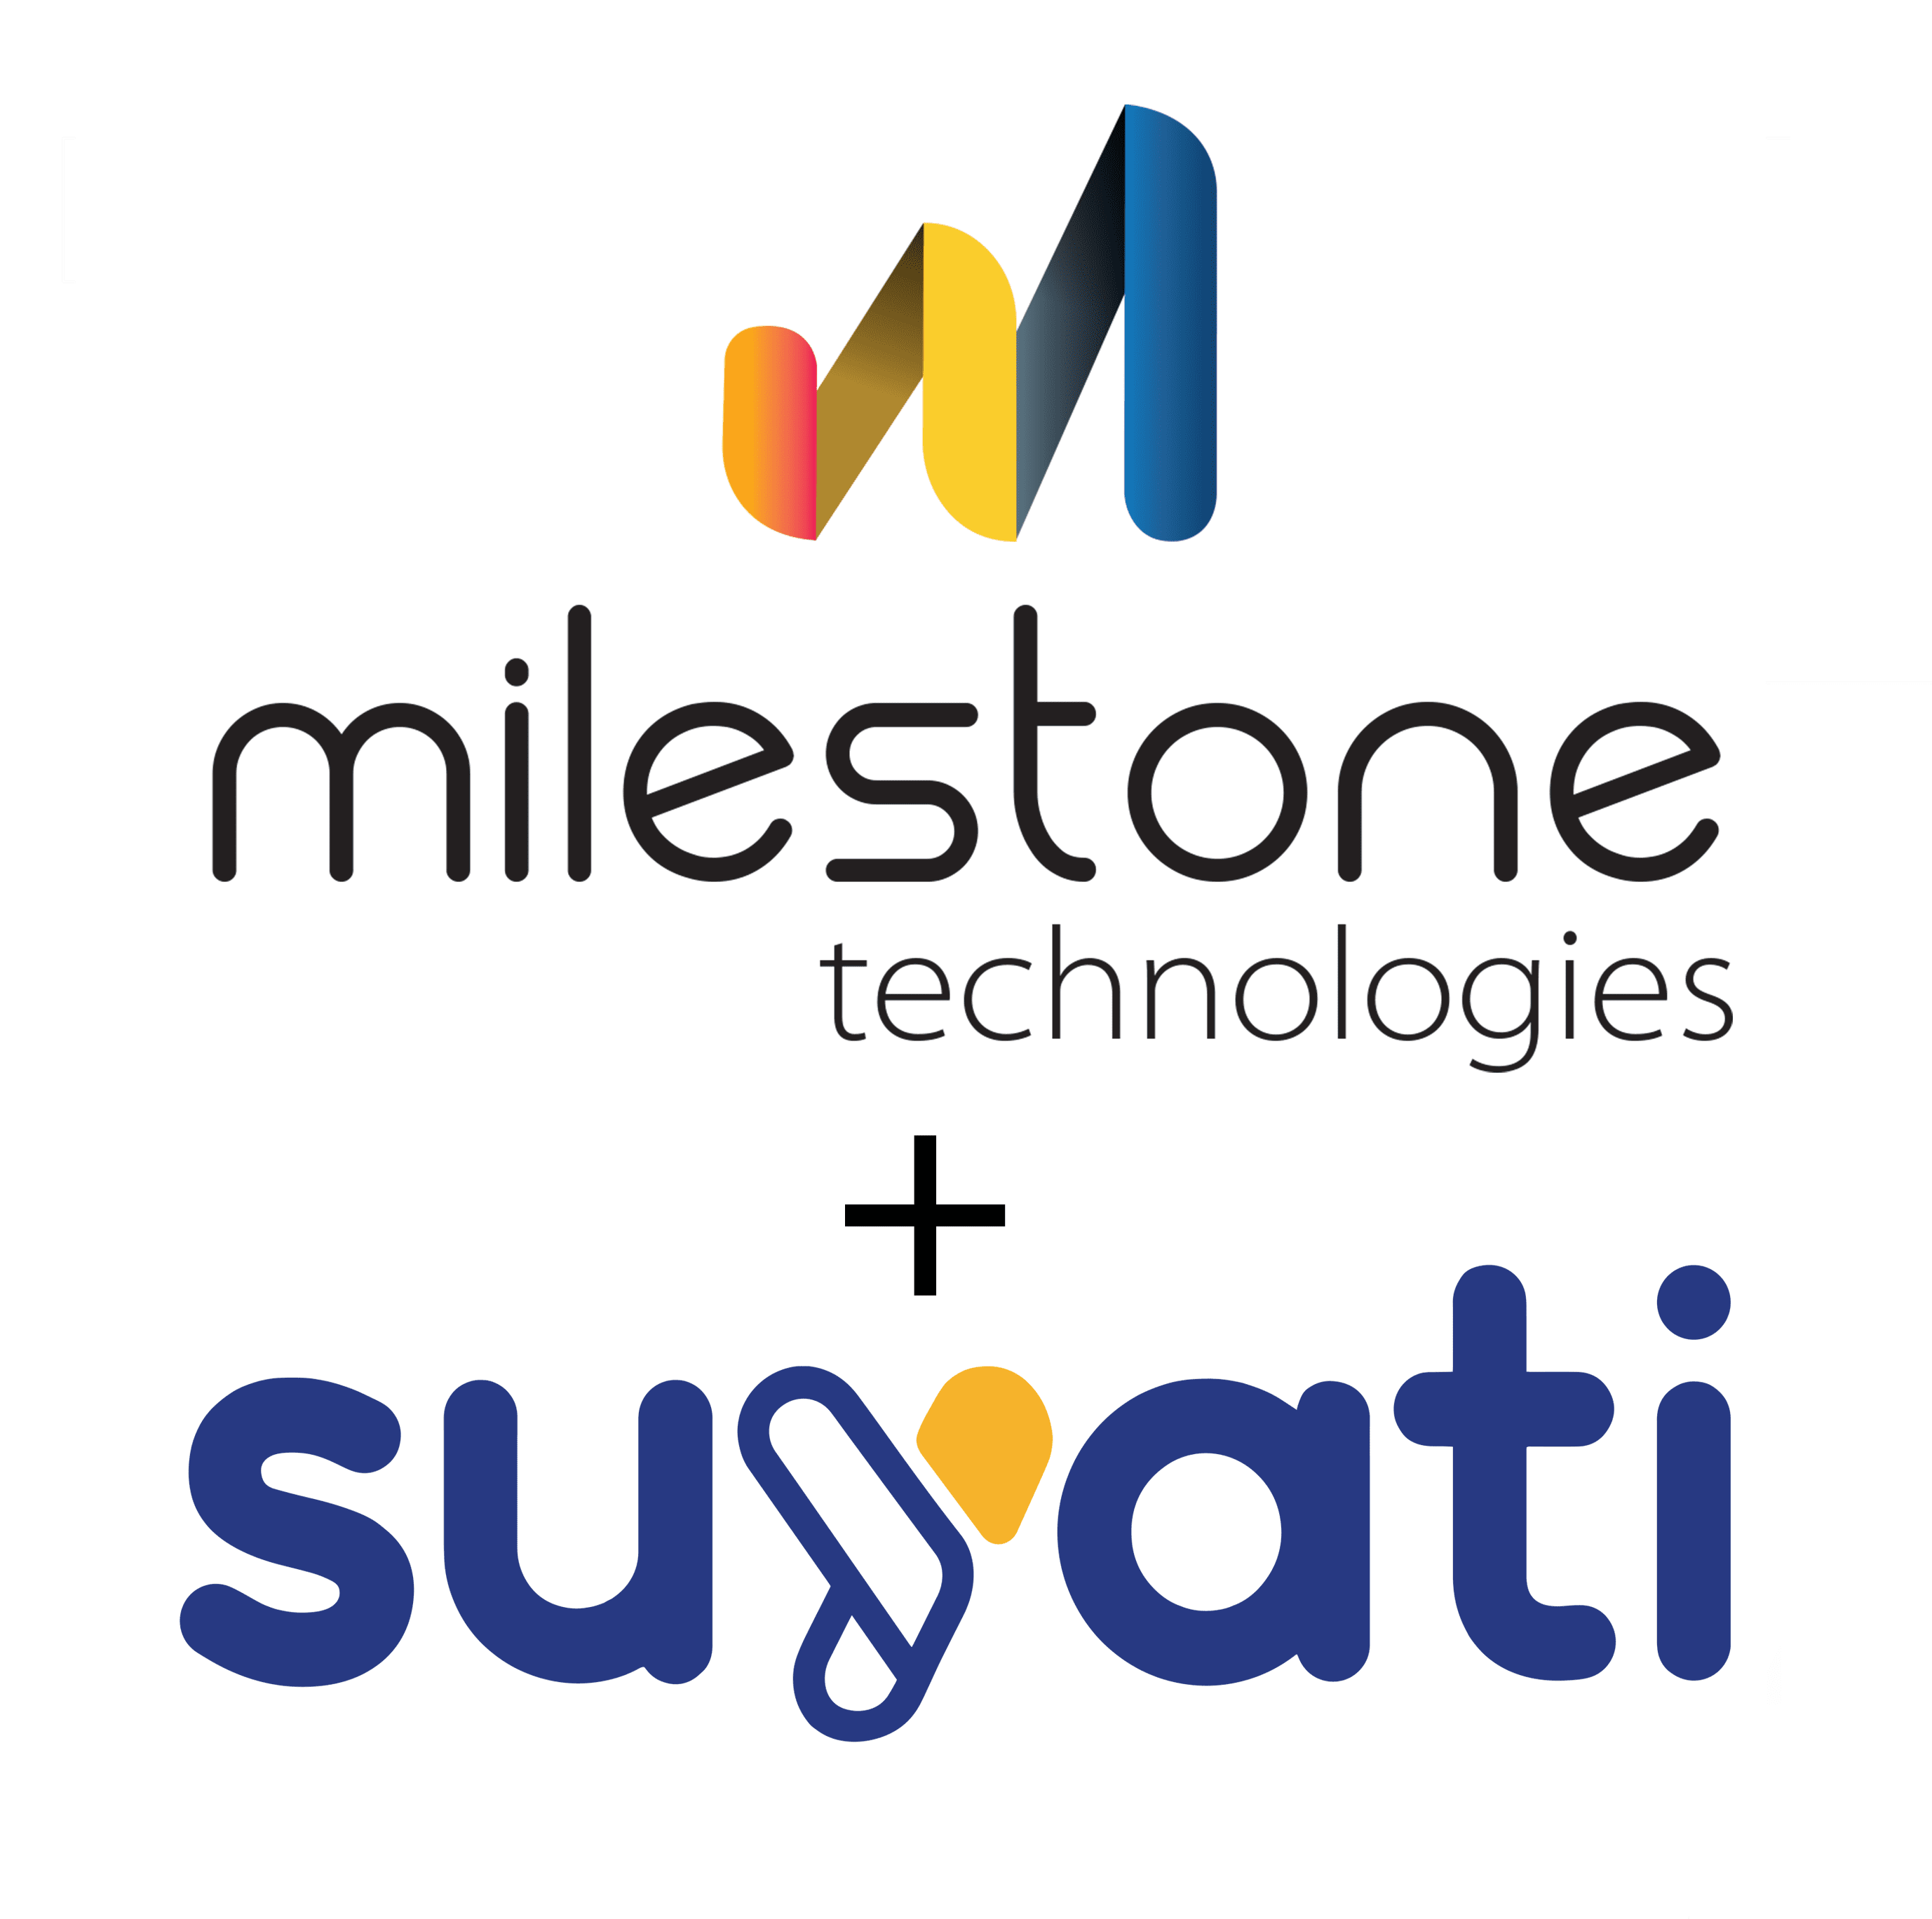 Suyati Technologies, Milestone Technologies announces acquisition of Suyati Technologies